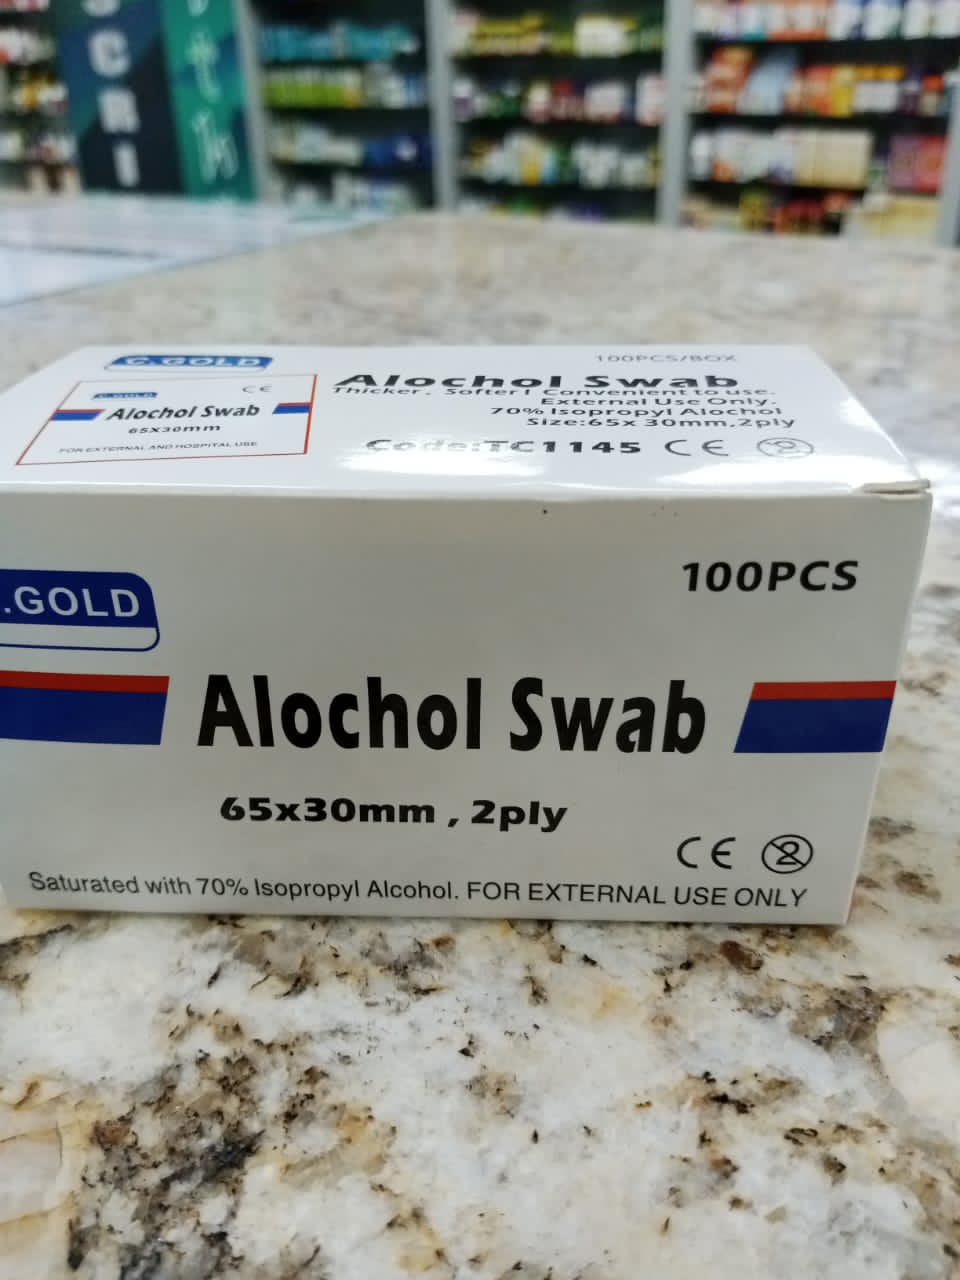 Alcohol swab